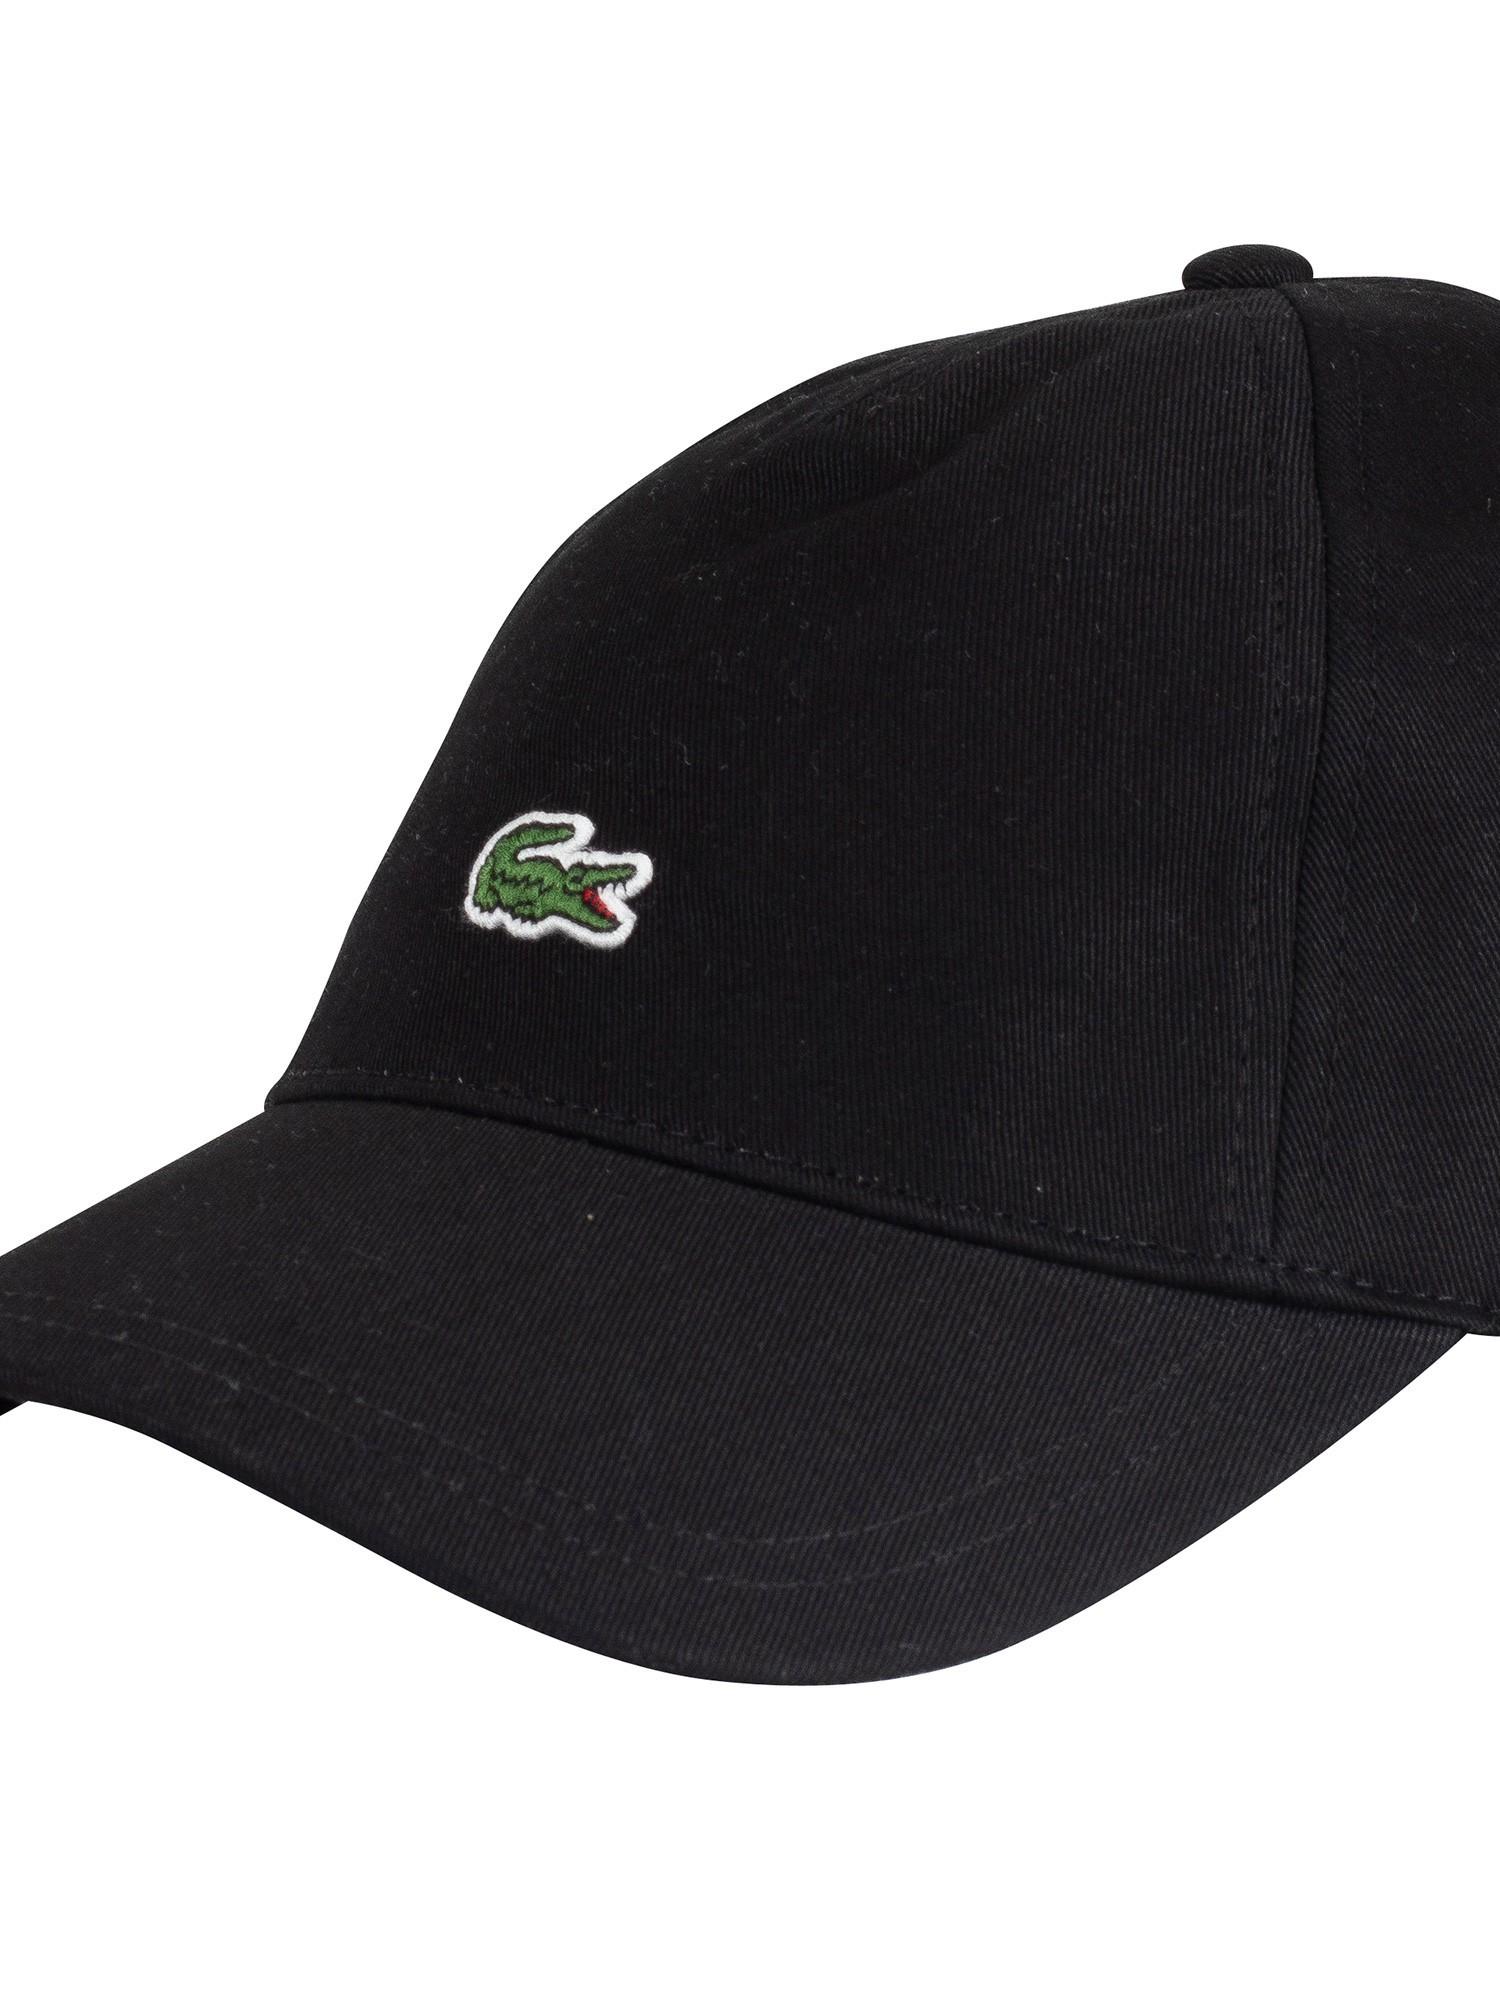 Lacoste Cotton Logo Baseball Cap in Black for Men - Lyst